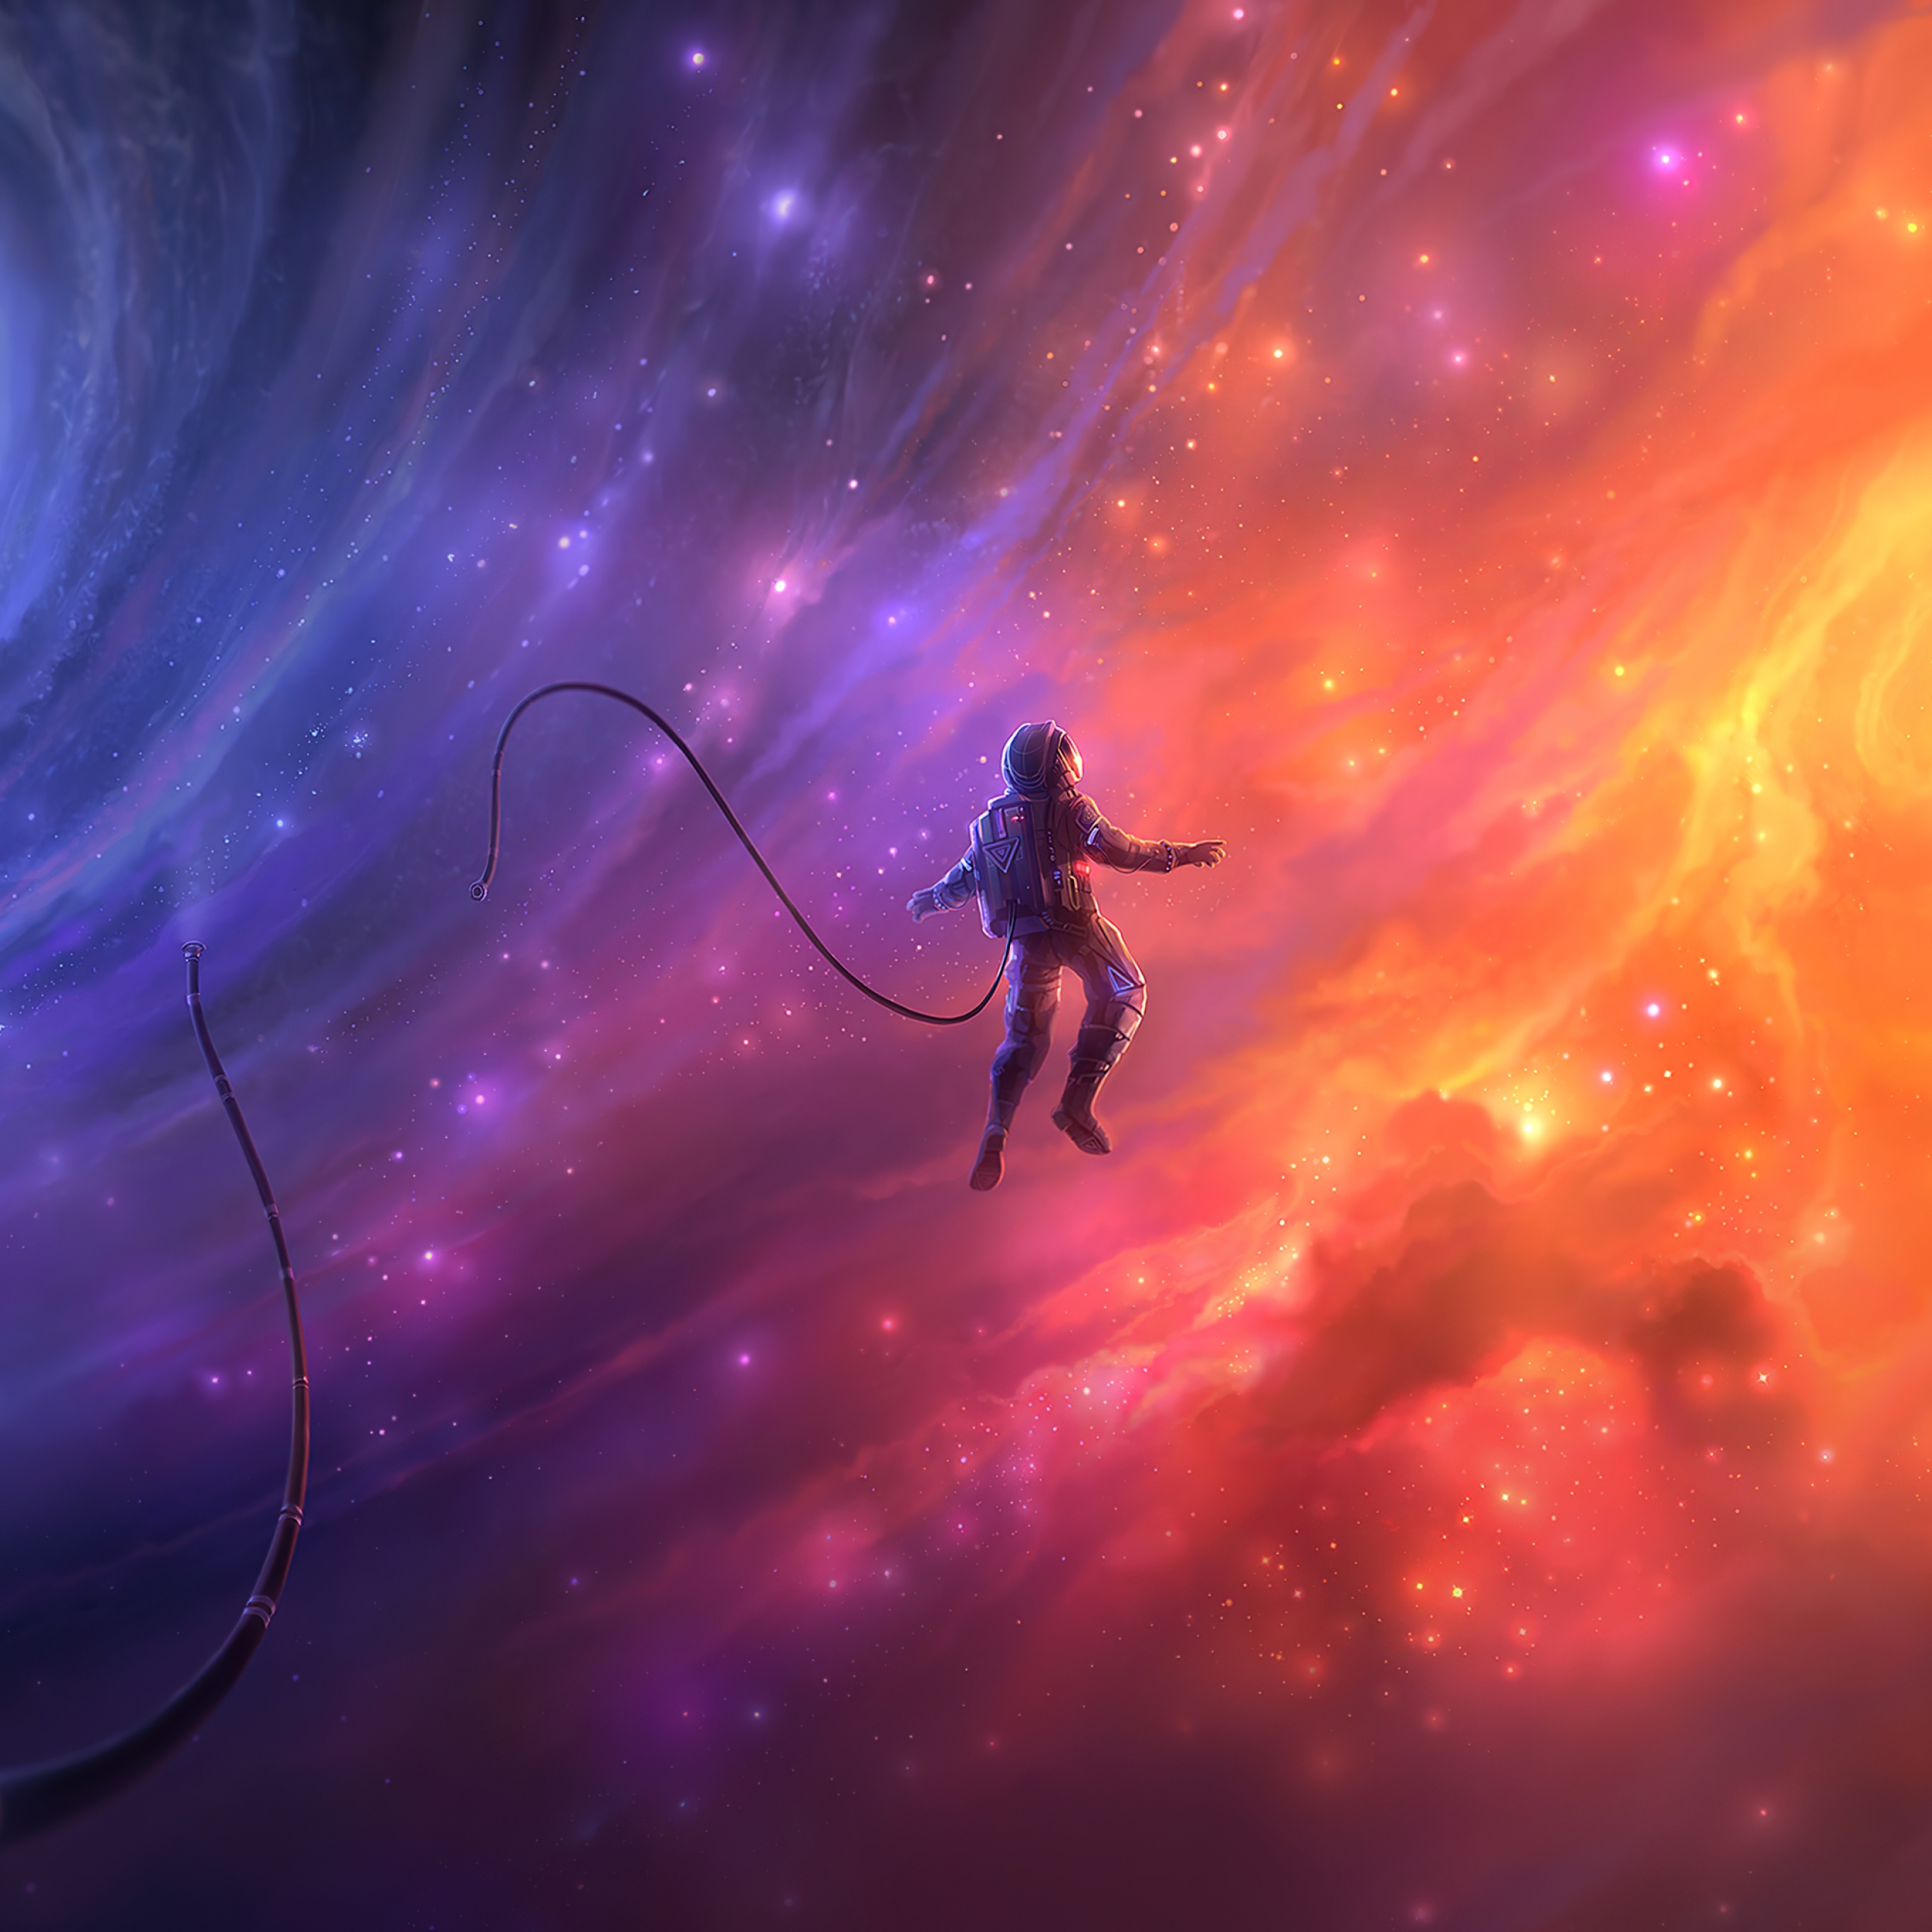 Astronaut Wallpaper 4k Dream Galaxy Astronomy Surreal